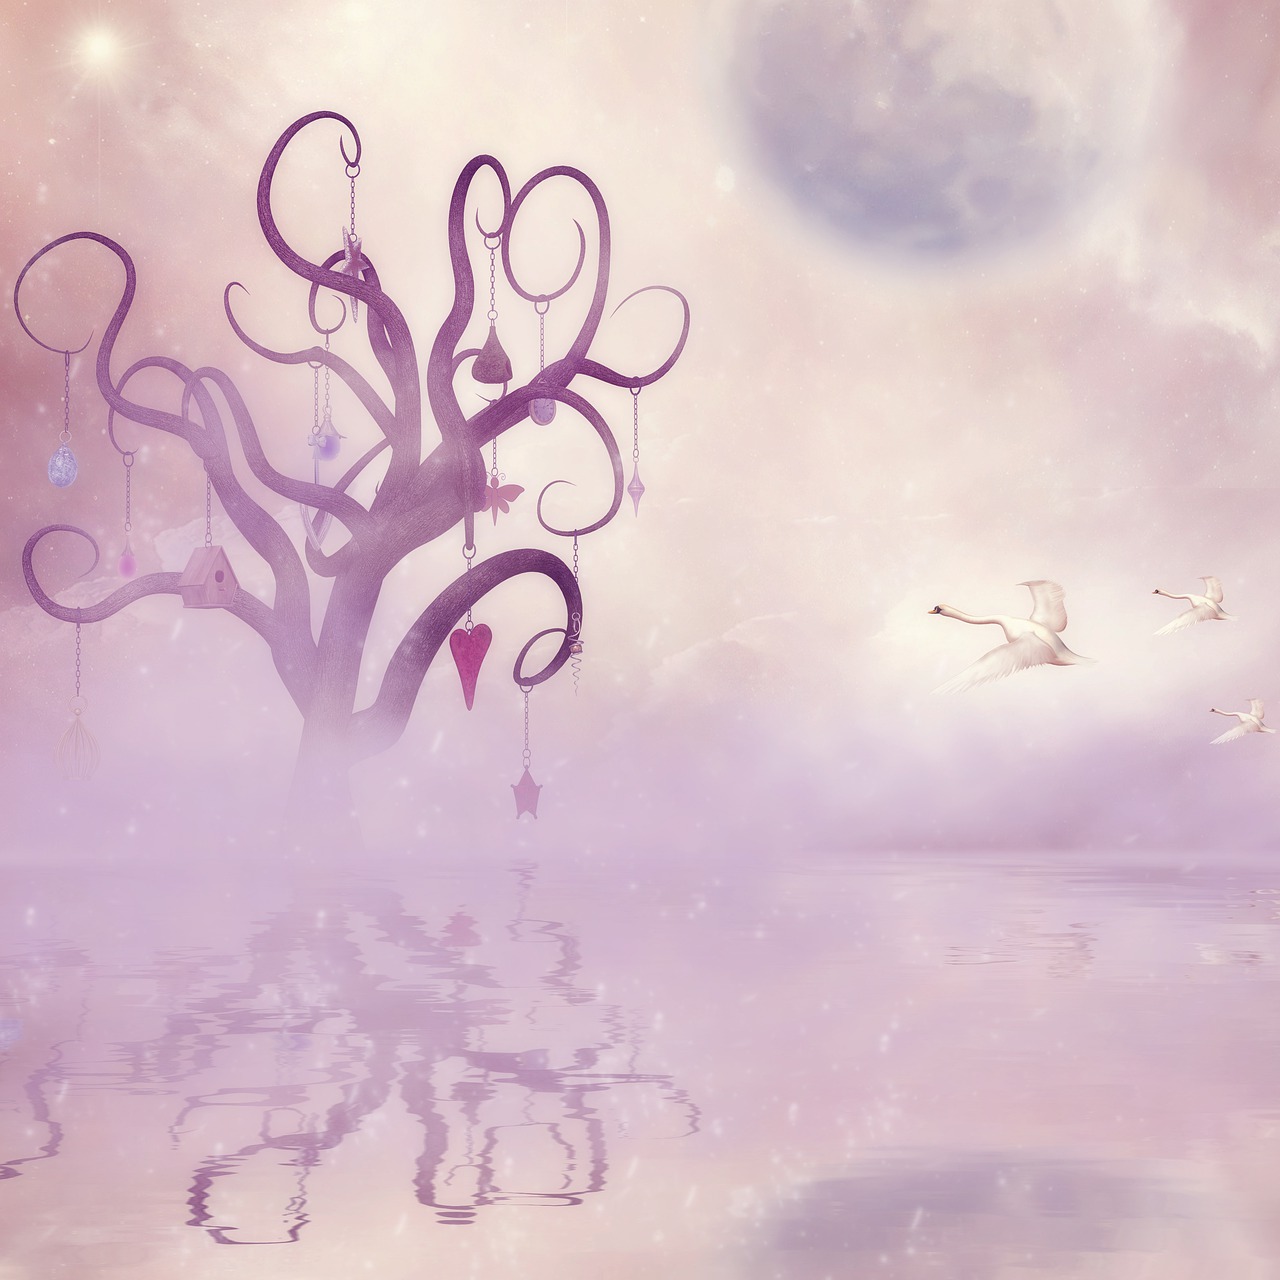 Fantasy Tree Moon Water Swans  - Darkmoon_Art / Pixabay